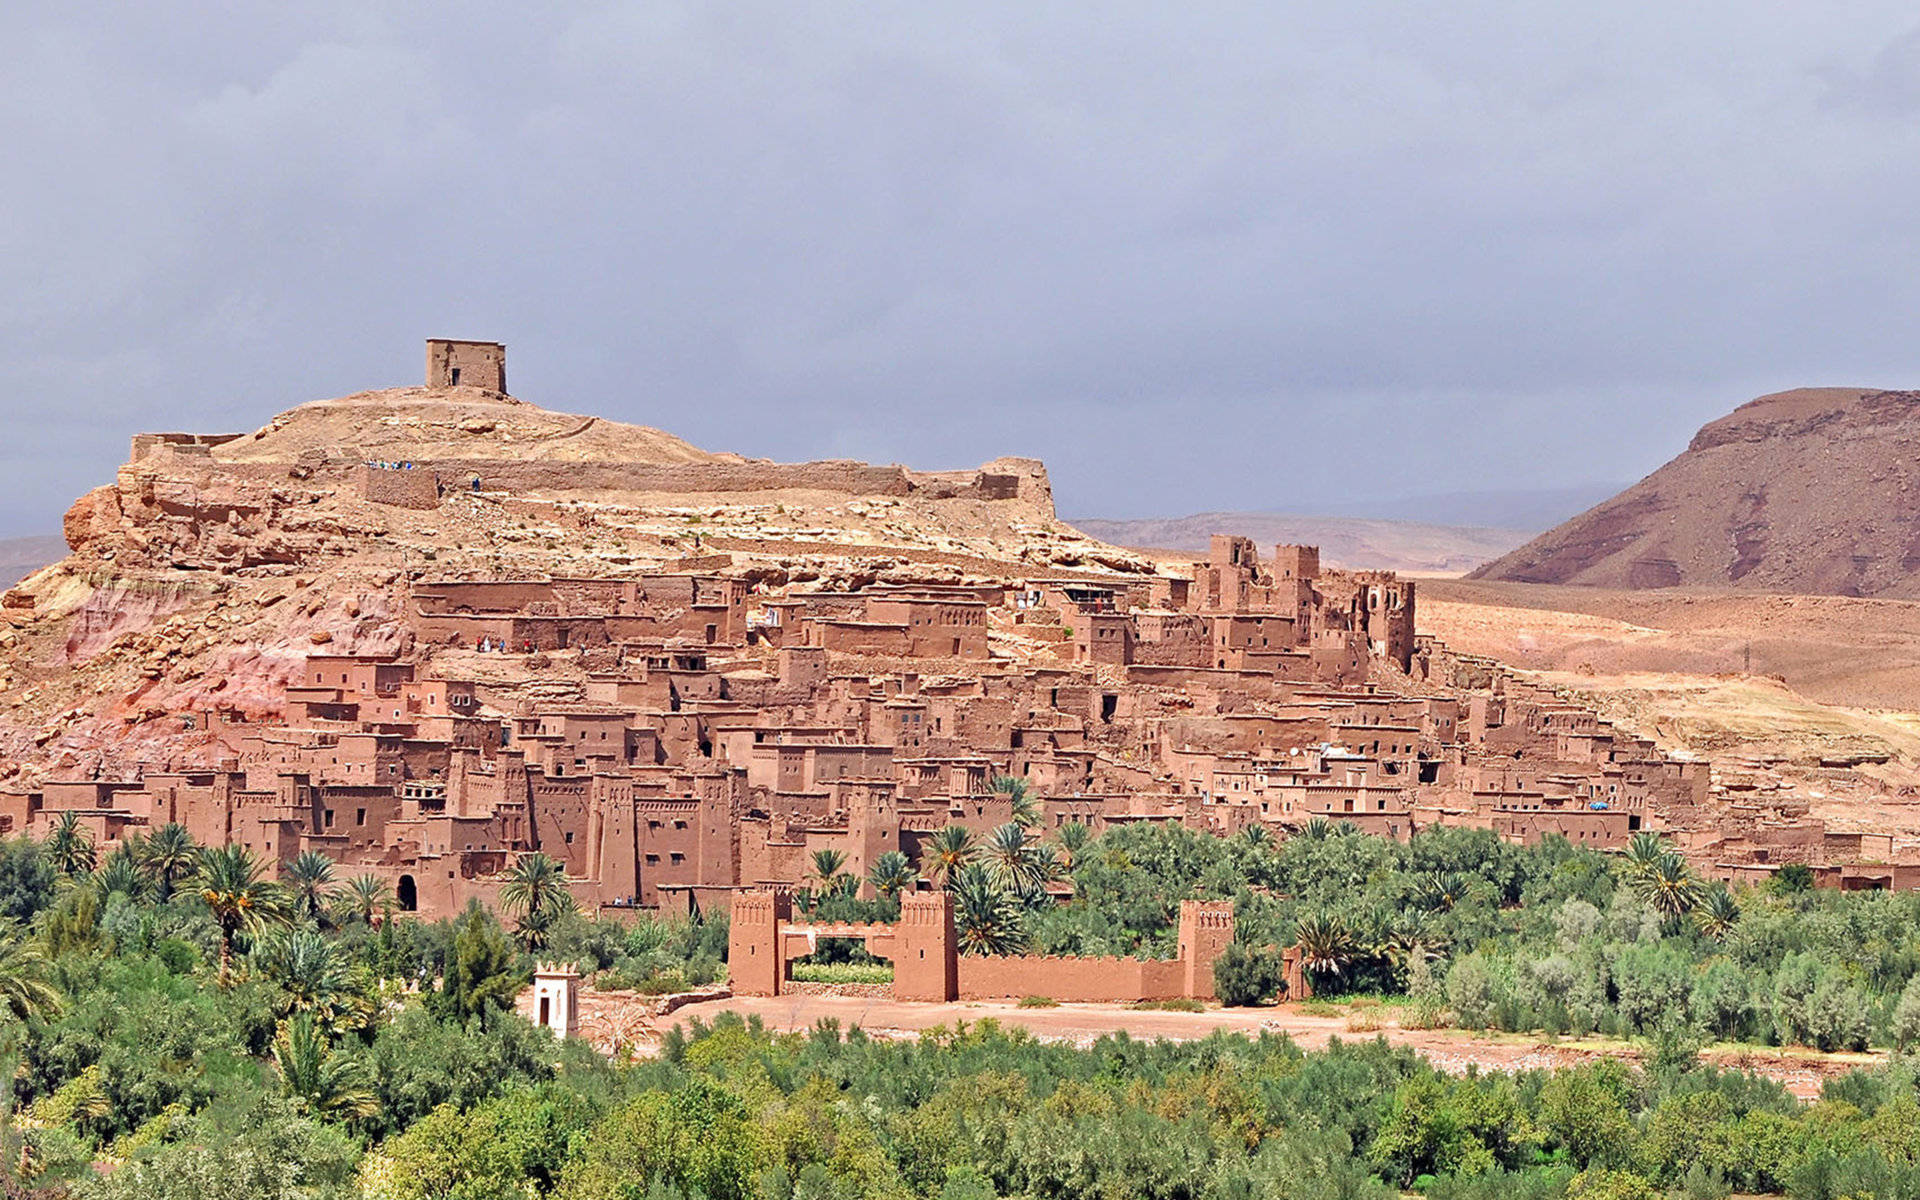 Full day trip from Marrakech to Ait Ben Haddou & Ouarzazate